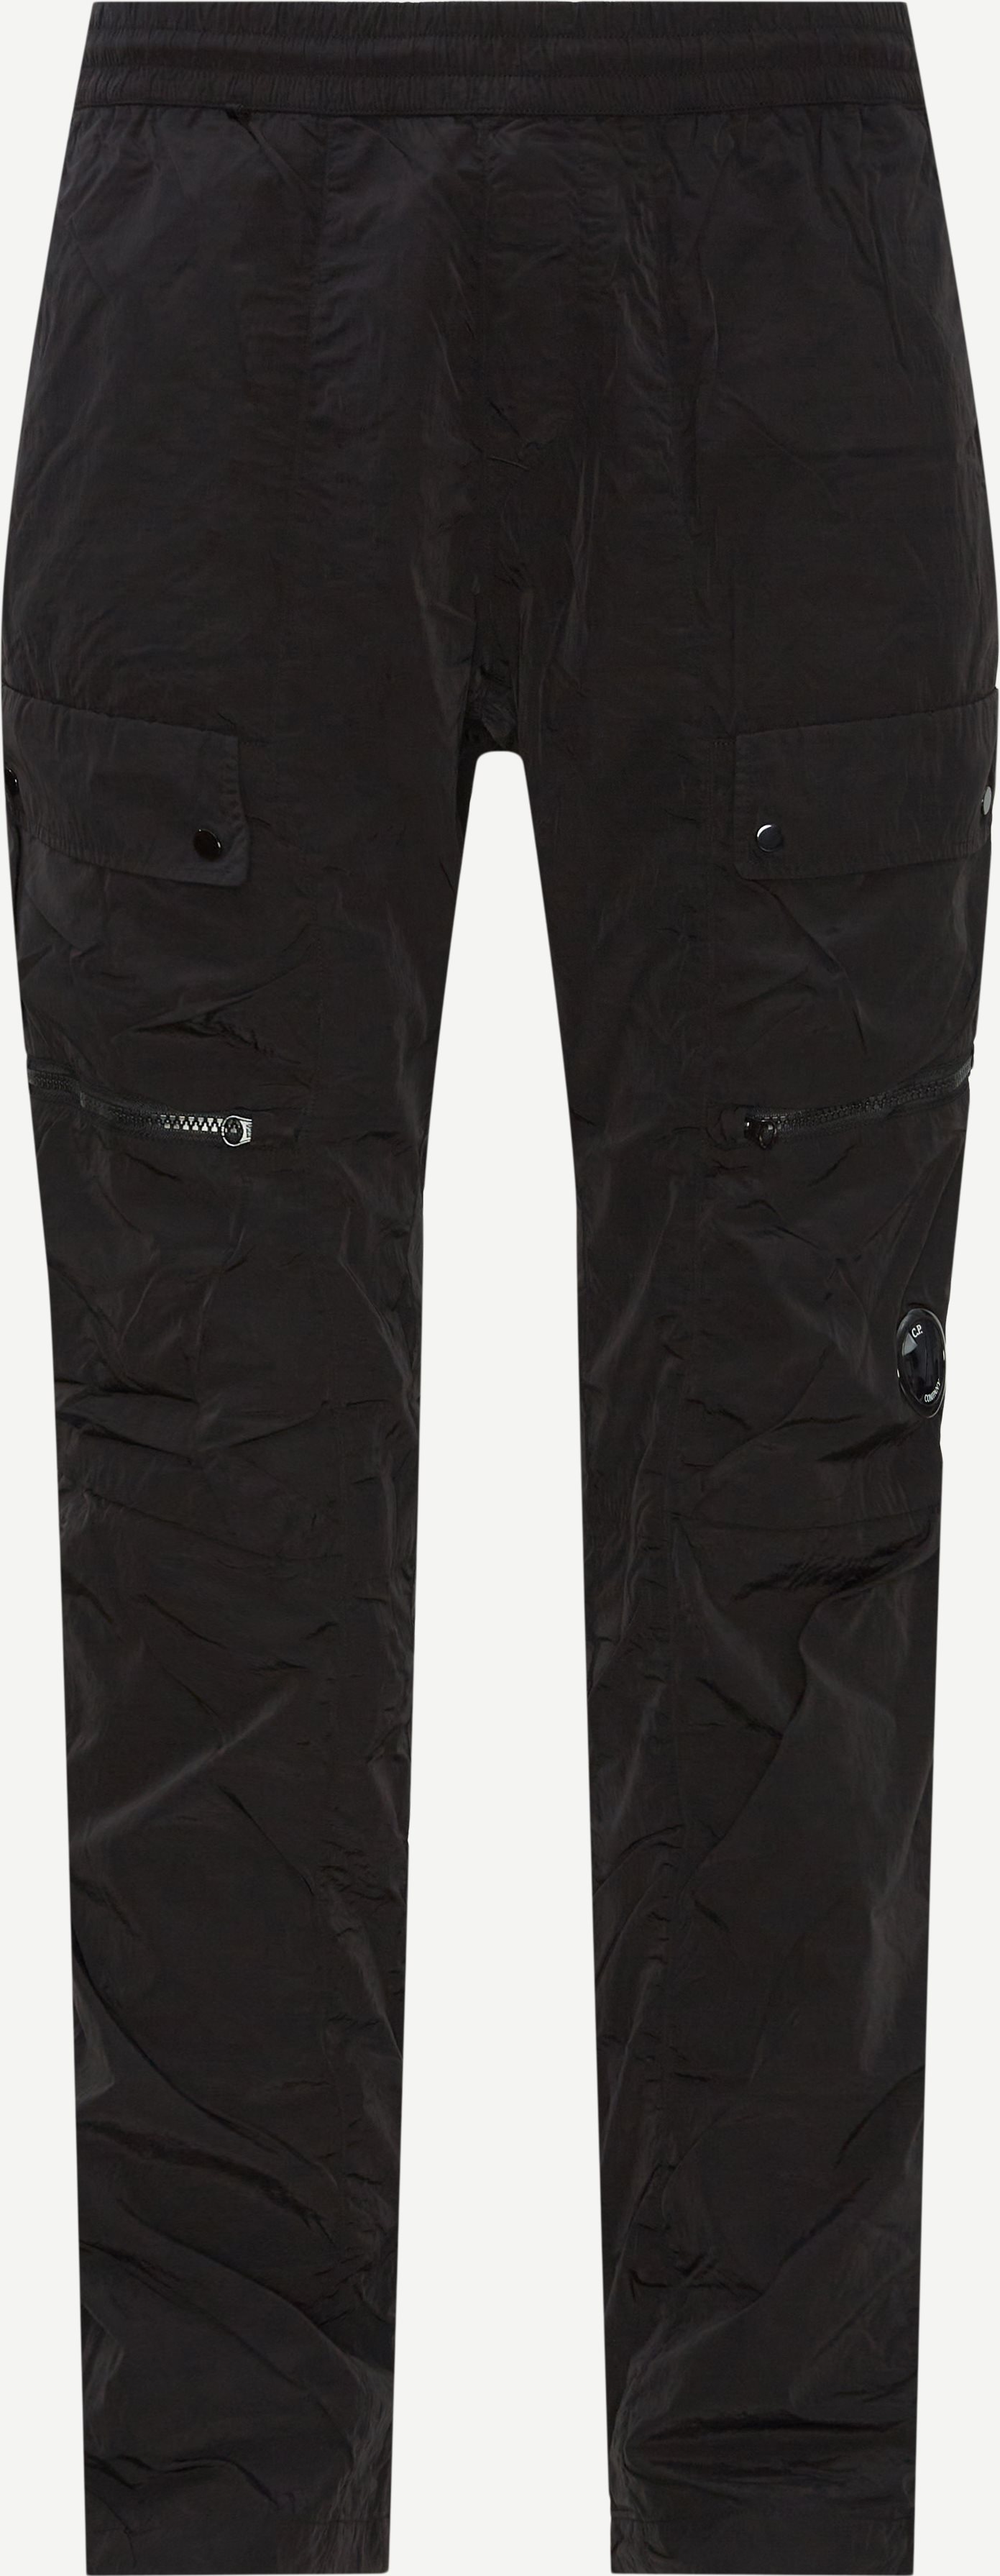 C.P. Company Trousers PA004A 005904G Black